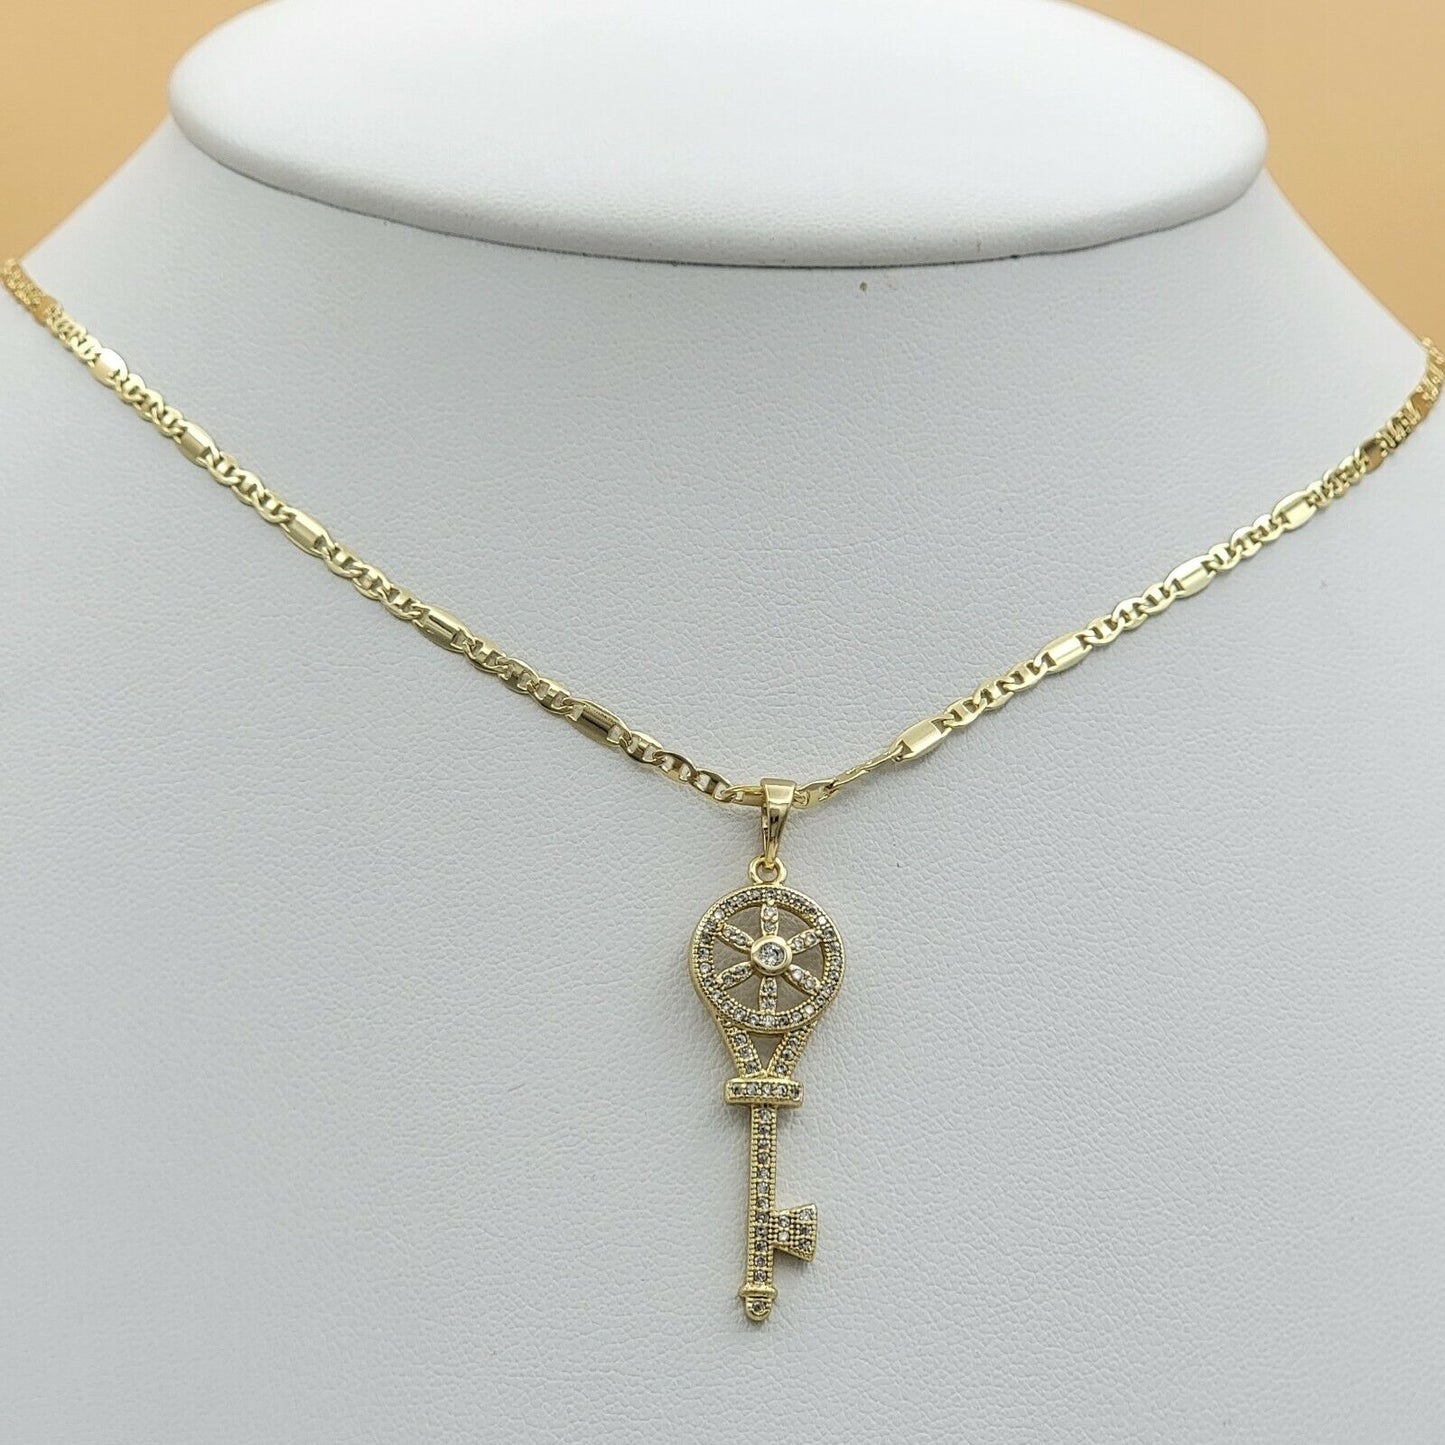 Necklaces - 14K Gold Plated. Elegant Flower CZ Key Pendant & Chain.